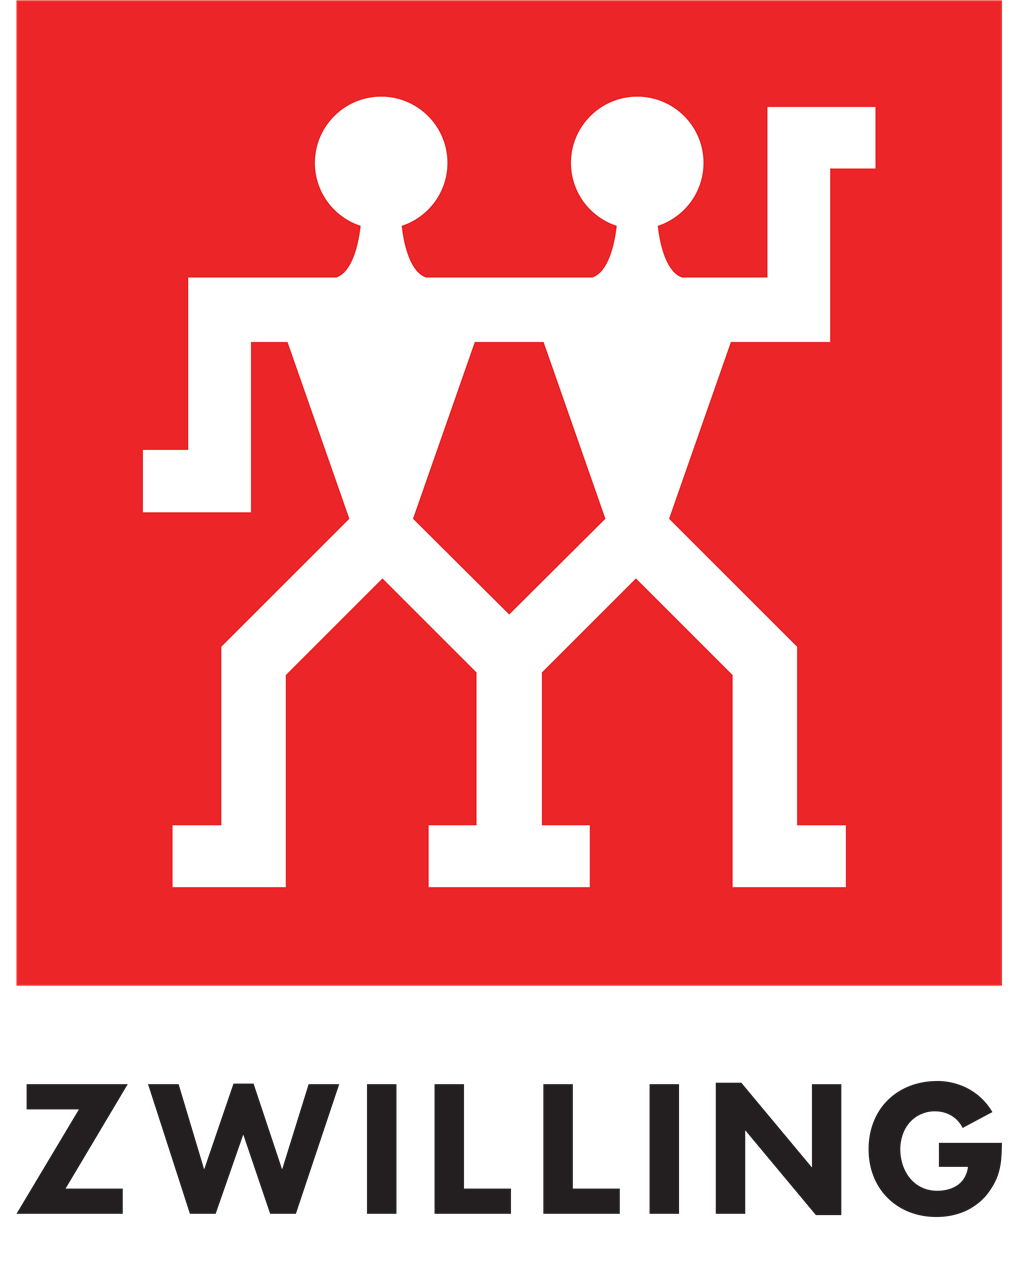 Zwilling logotype, transparent .png, medium, large